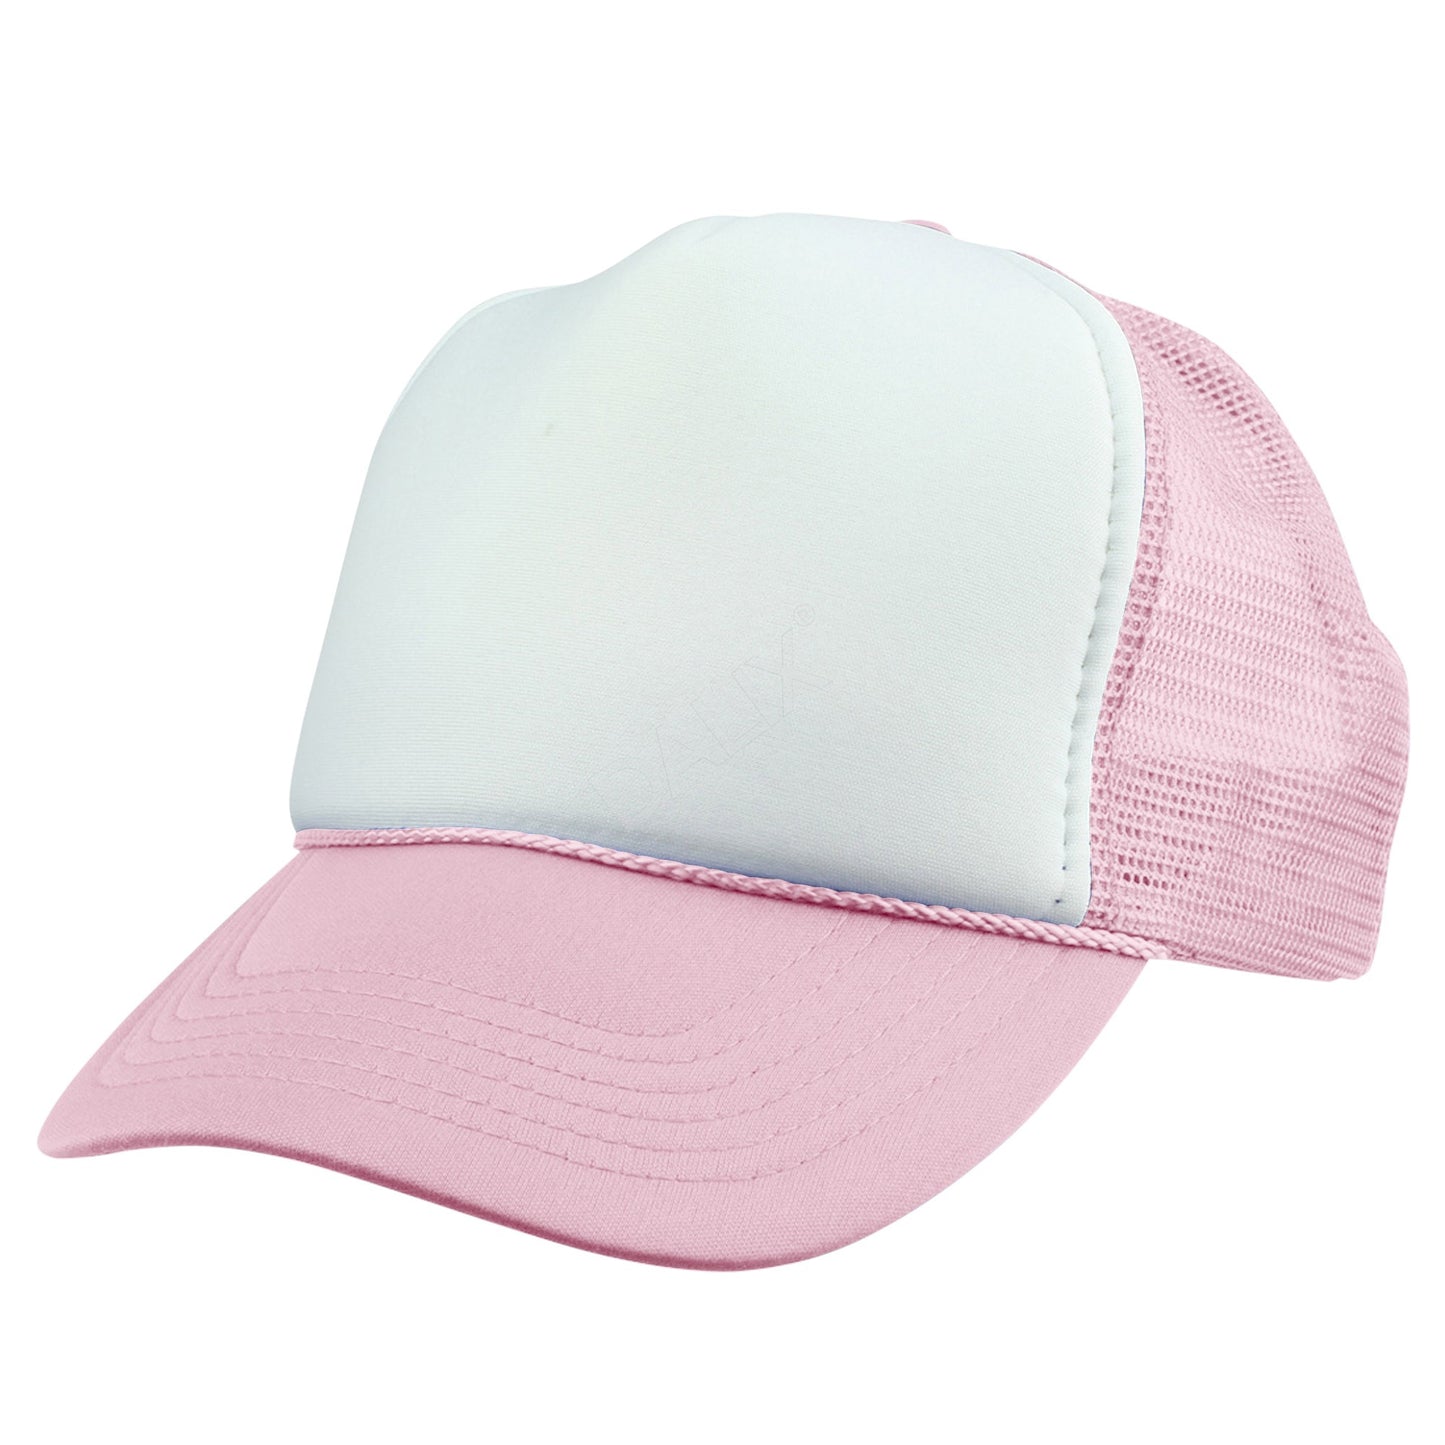 Basic Foam Trucker Hat with Mesh Back Adjustable Snapback Cap